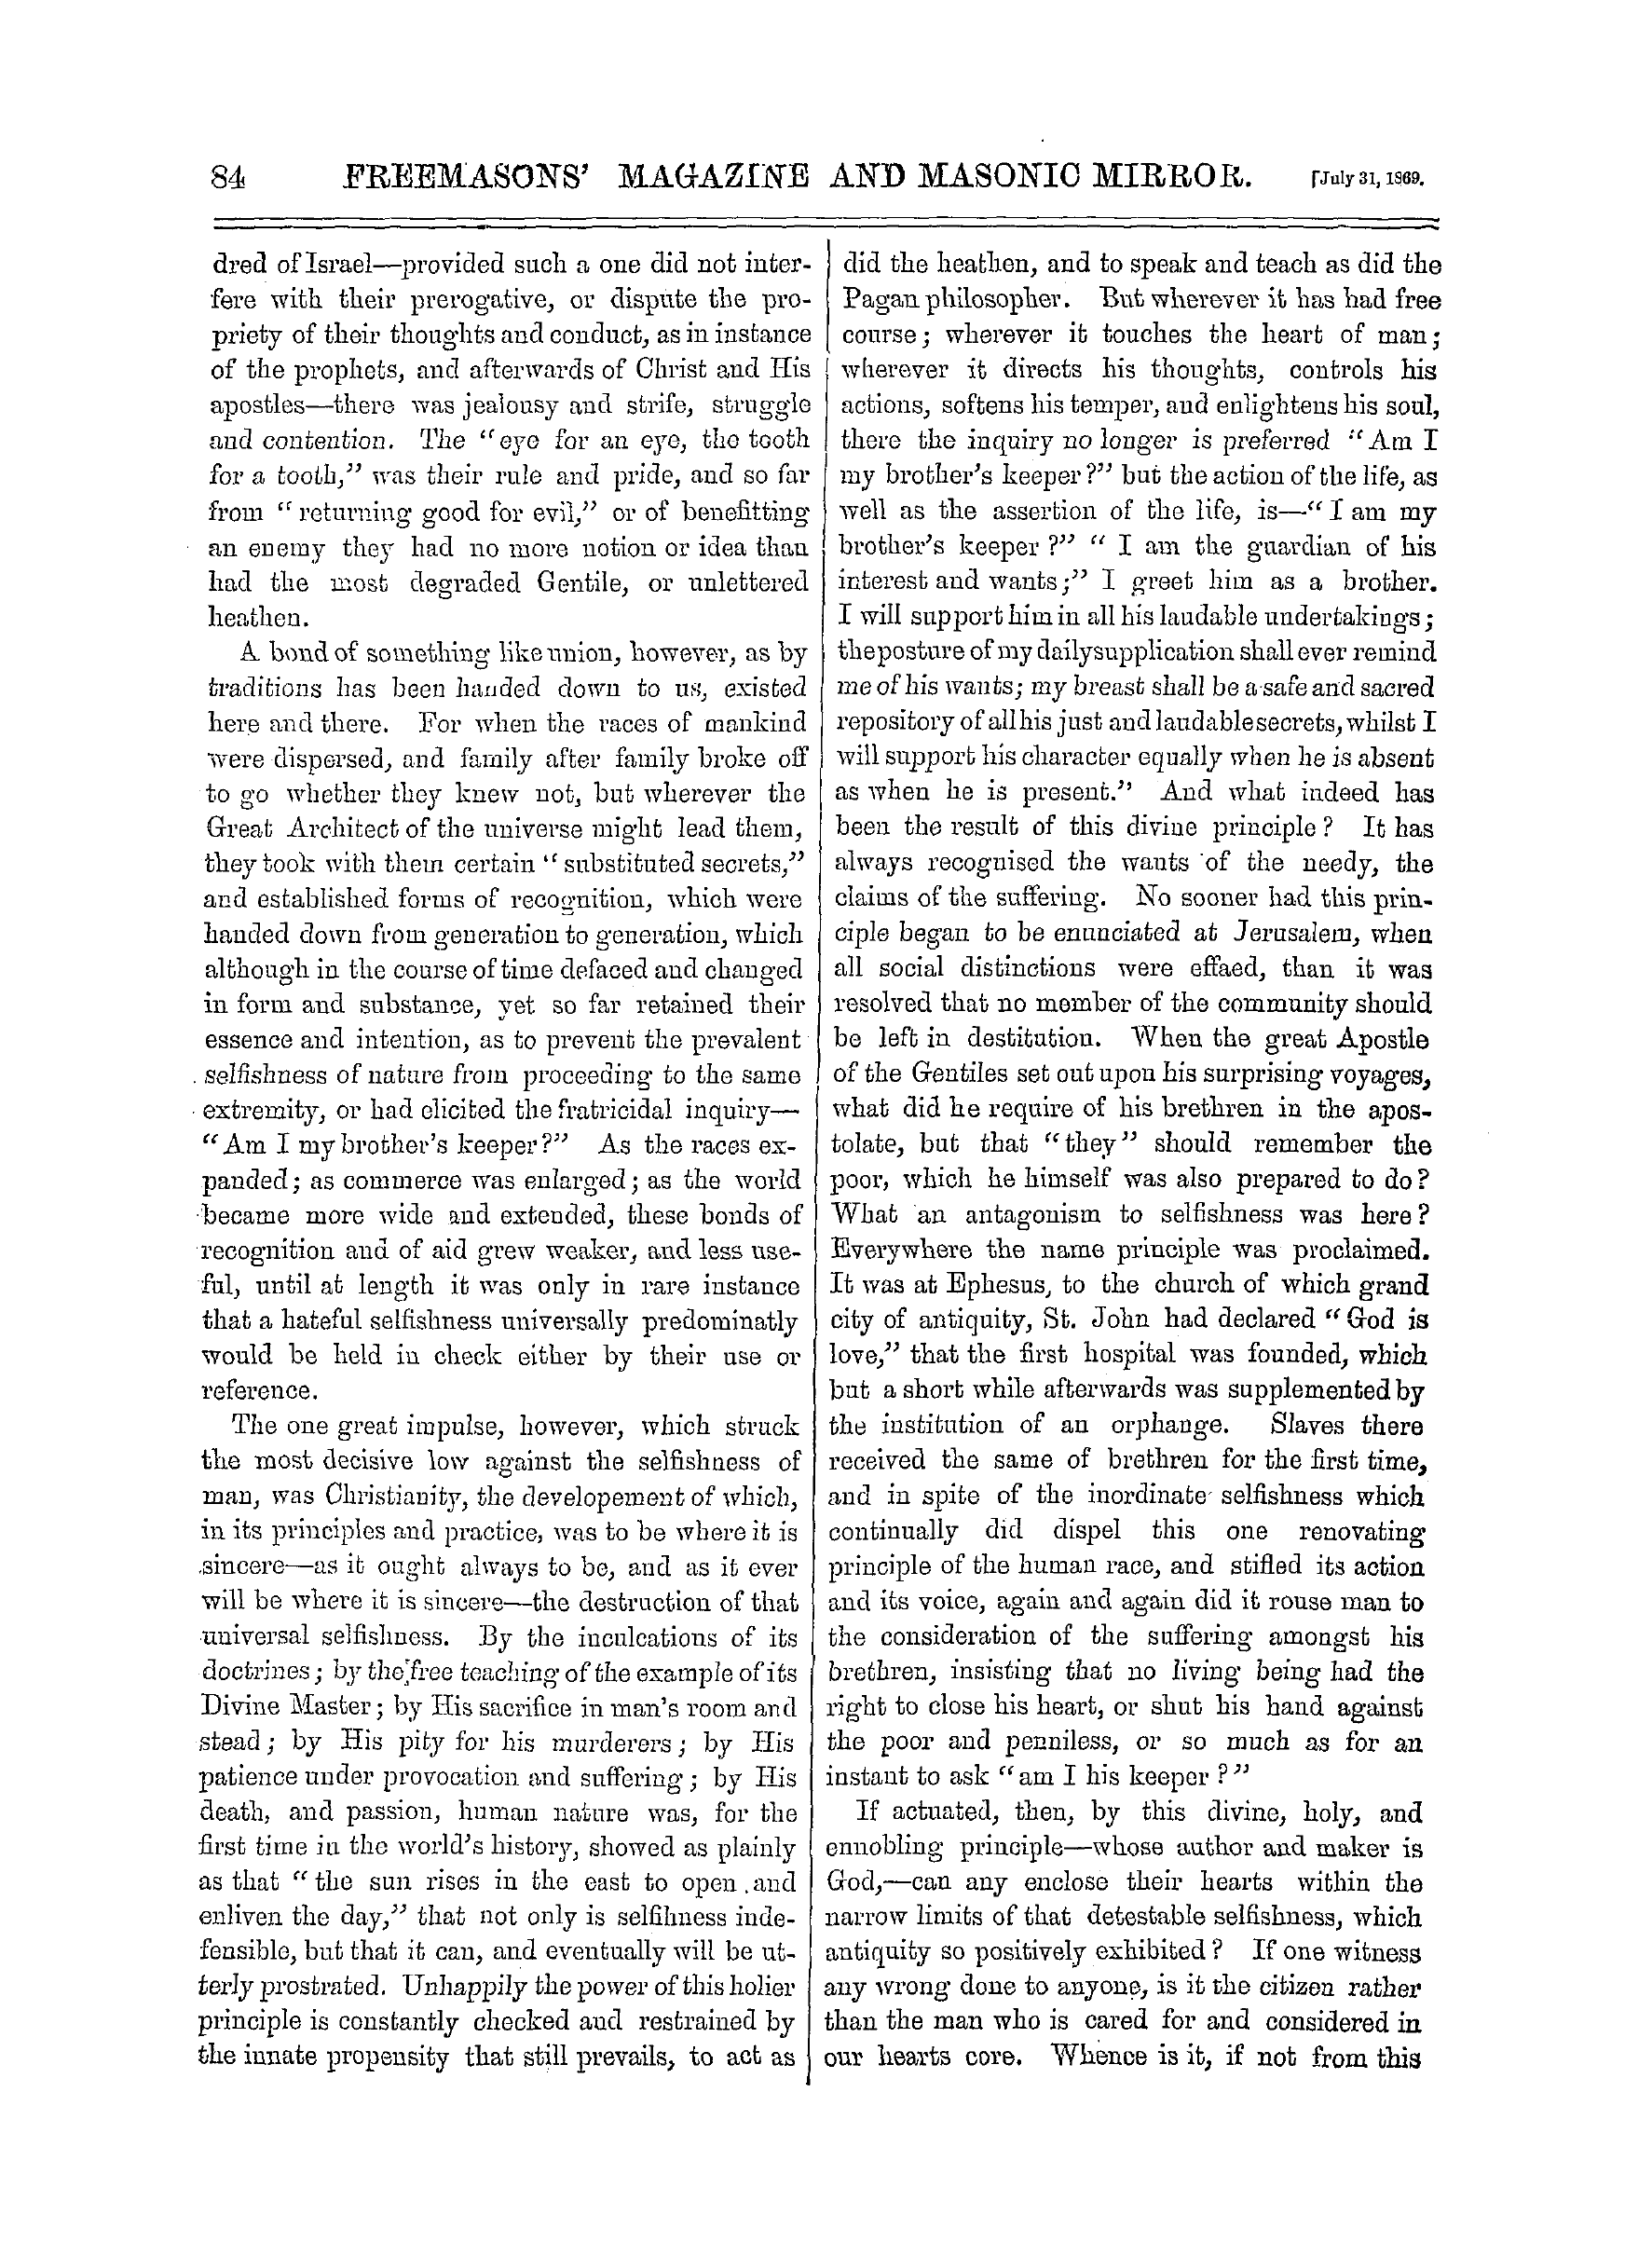 The Freemasons' Monthly Magazine: 1869-07-31 - Sermon,